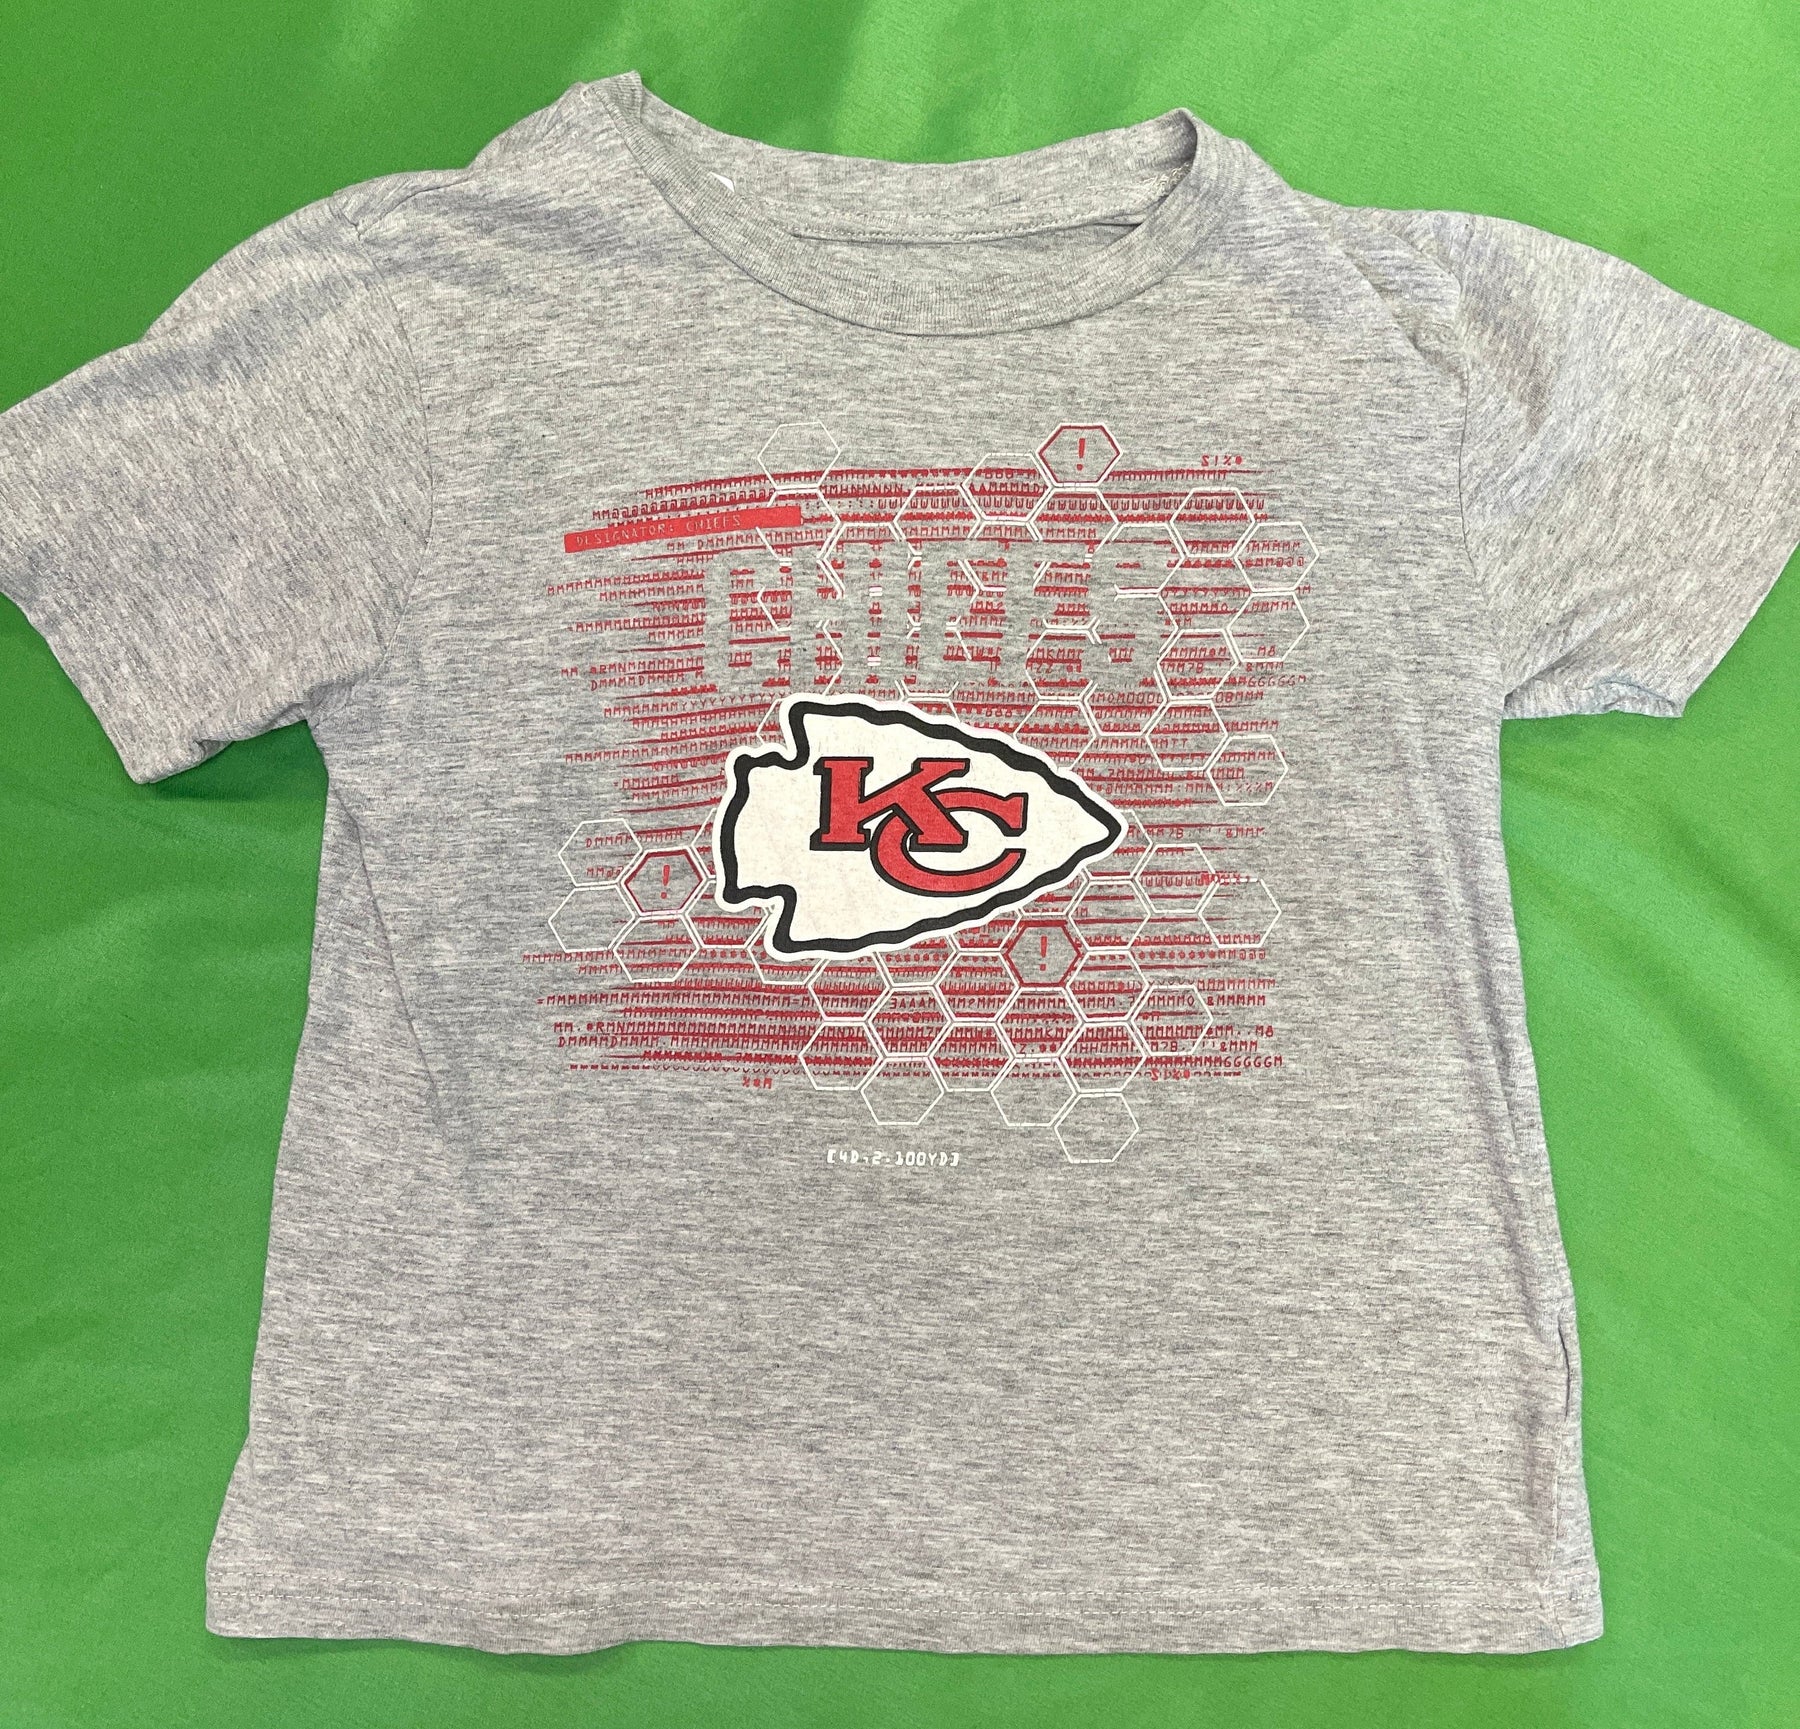 NFL Kansas City Chiefs Heathered Grey T-Shirt Youth Small 7